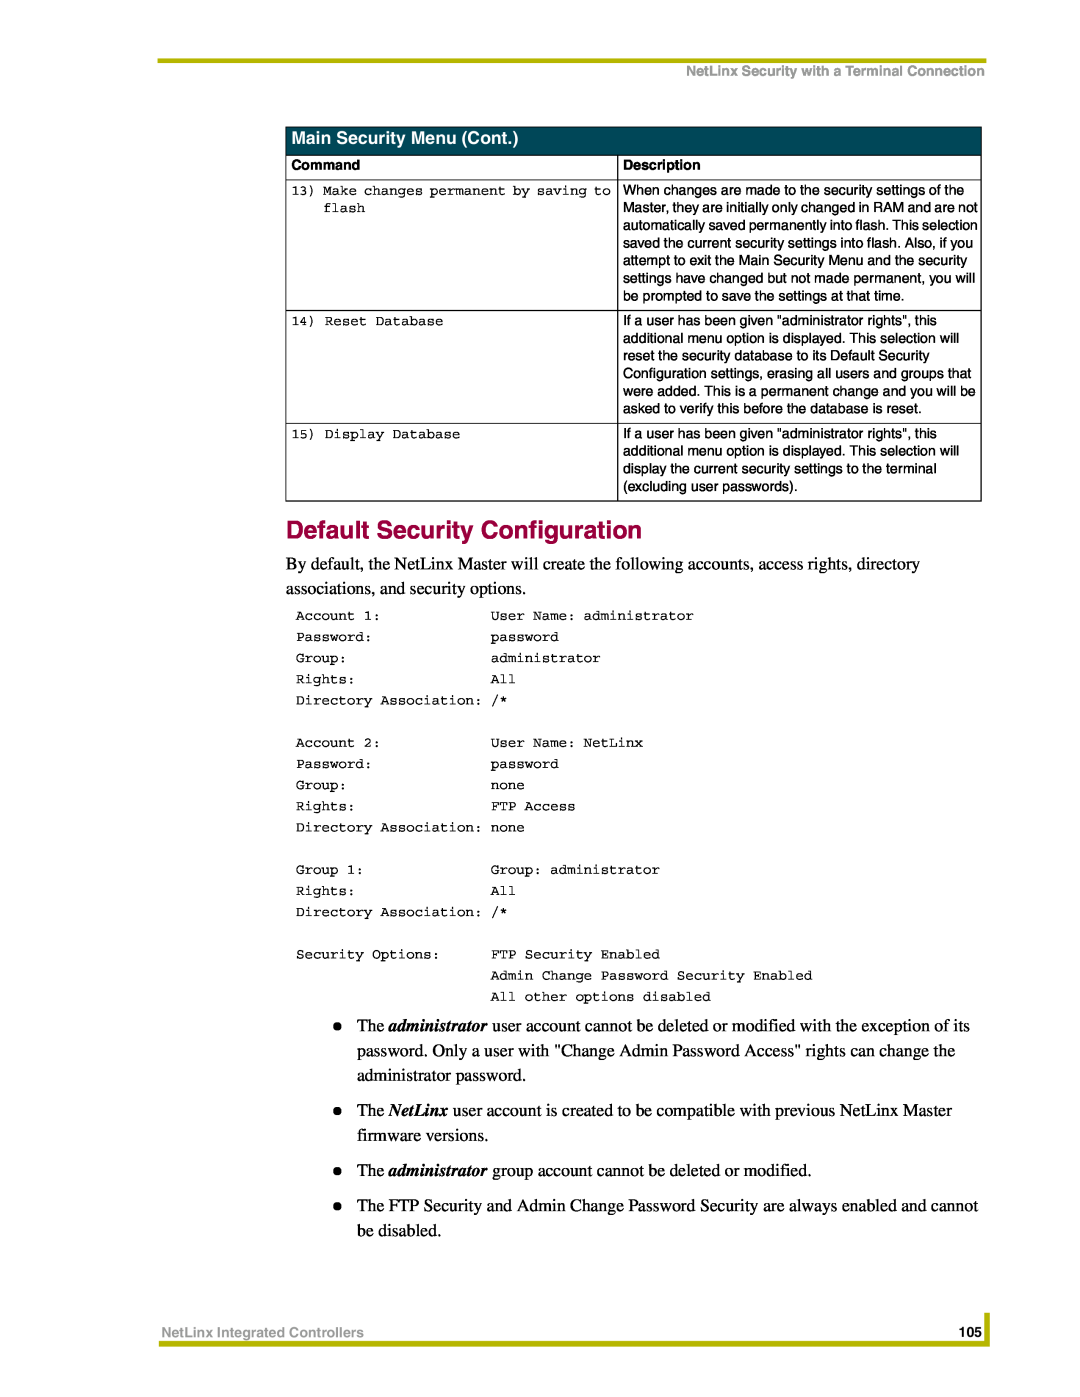 AMX NI-3000, NI-4000, NI-2000 instruction manual Default Security Configuration, Main Security Menu Cont, Description 